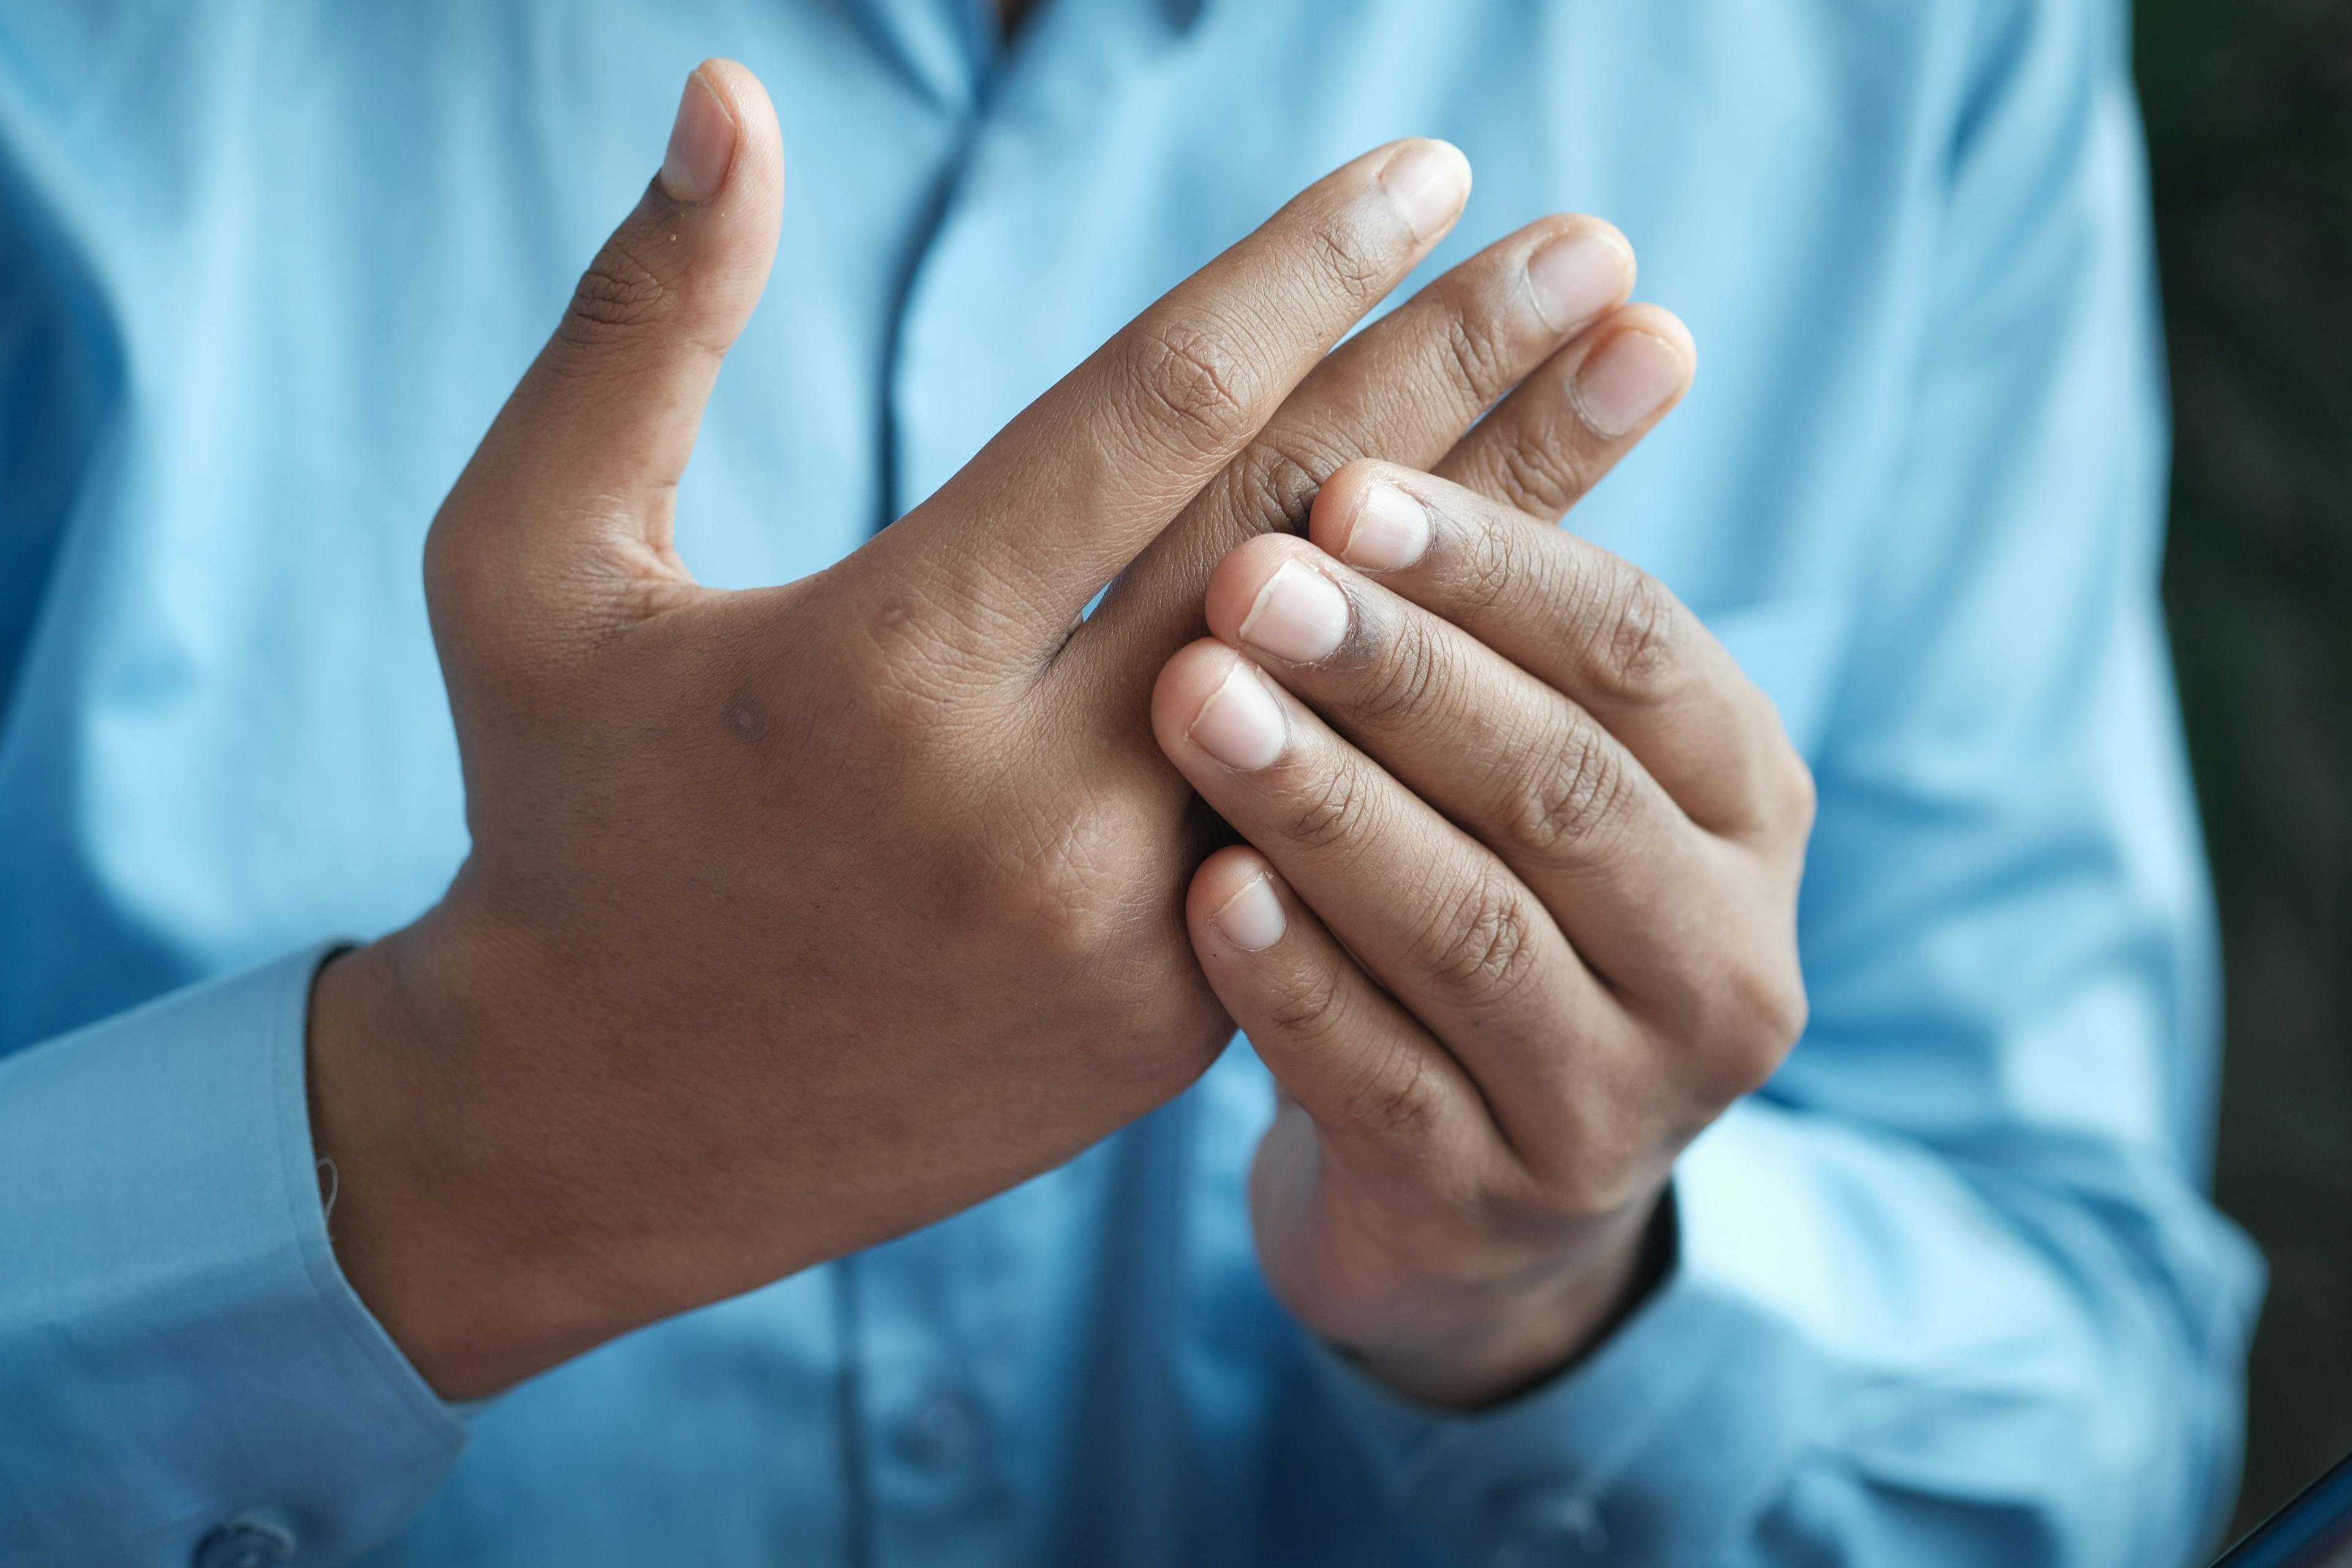  Rheumatoid arthritis | Credit: Unsplash